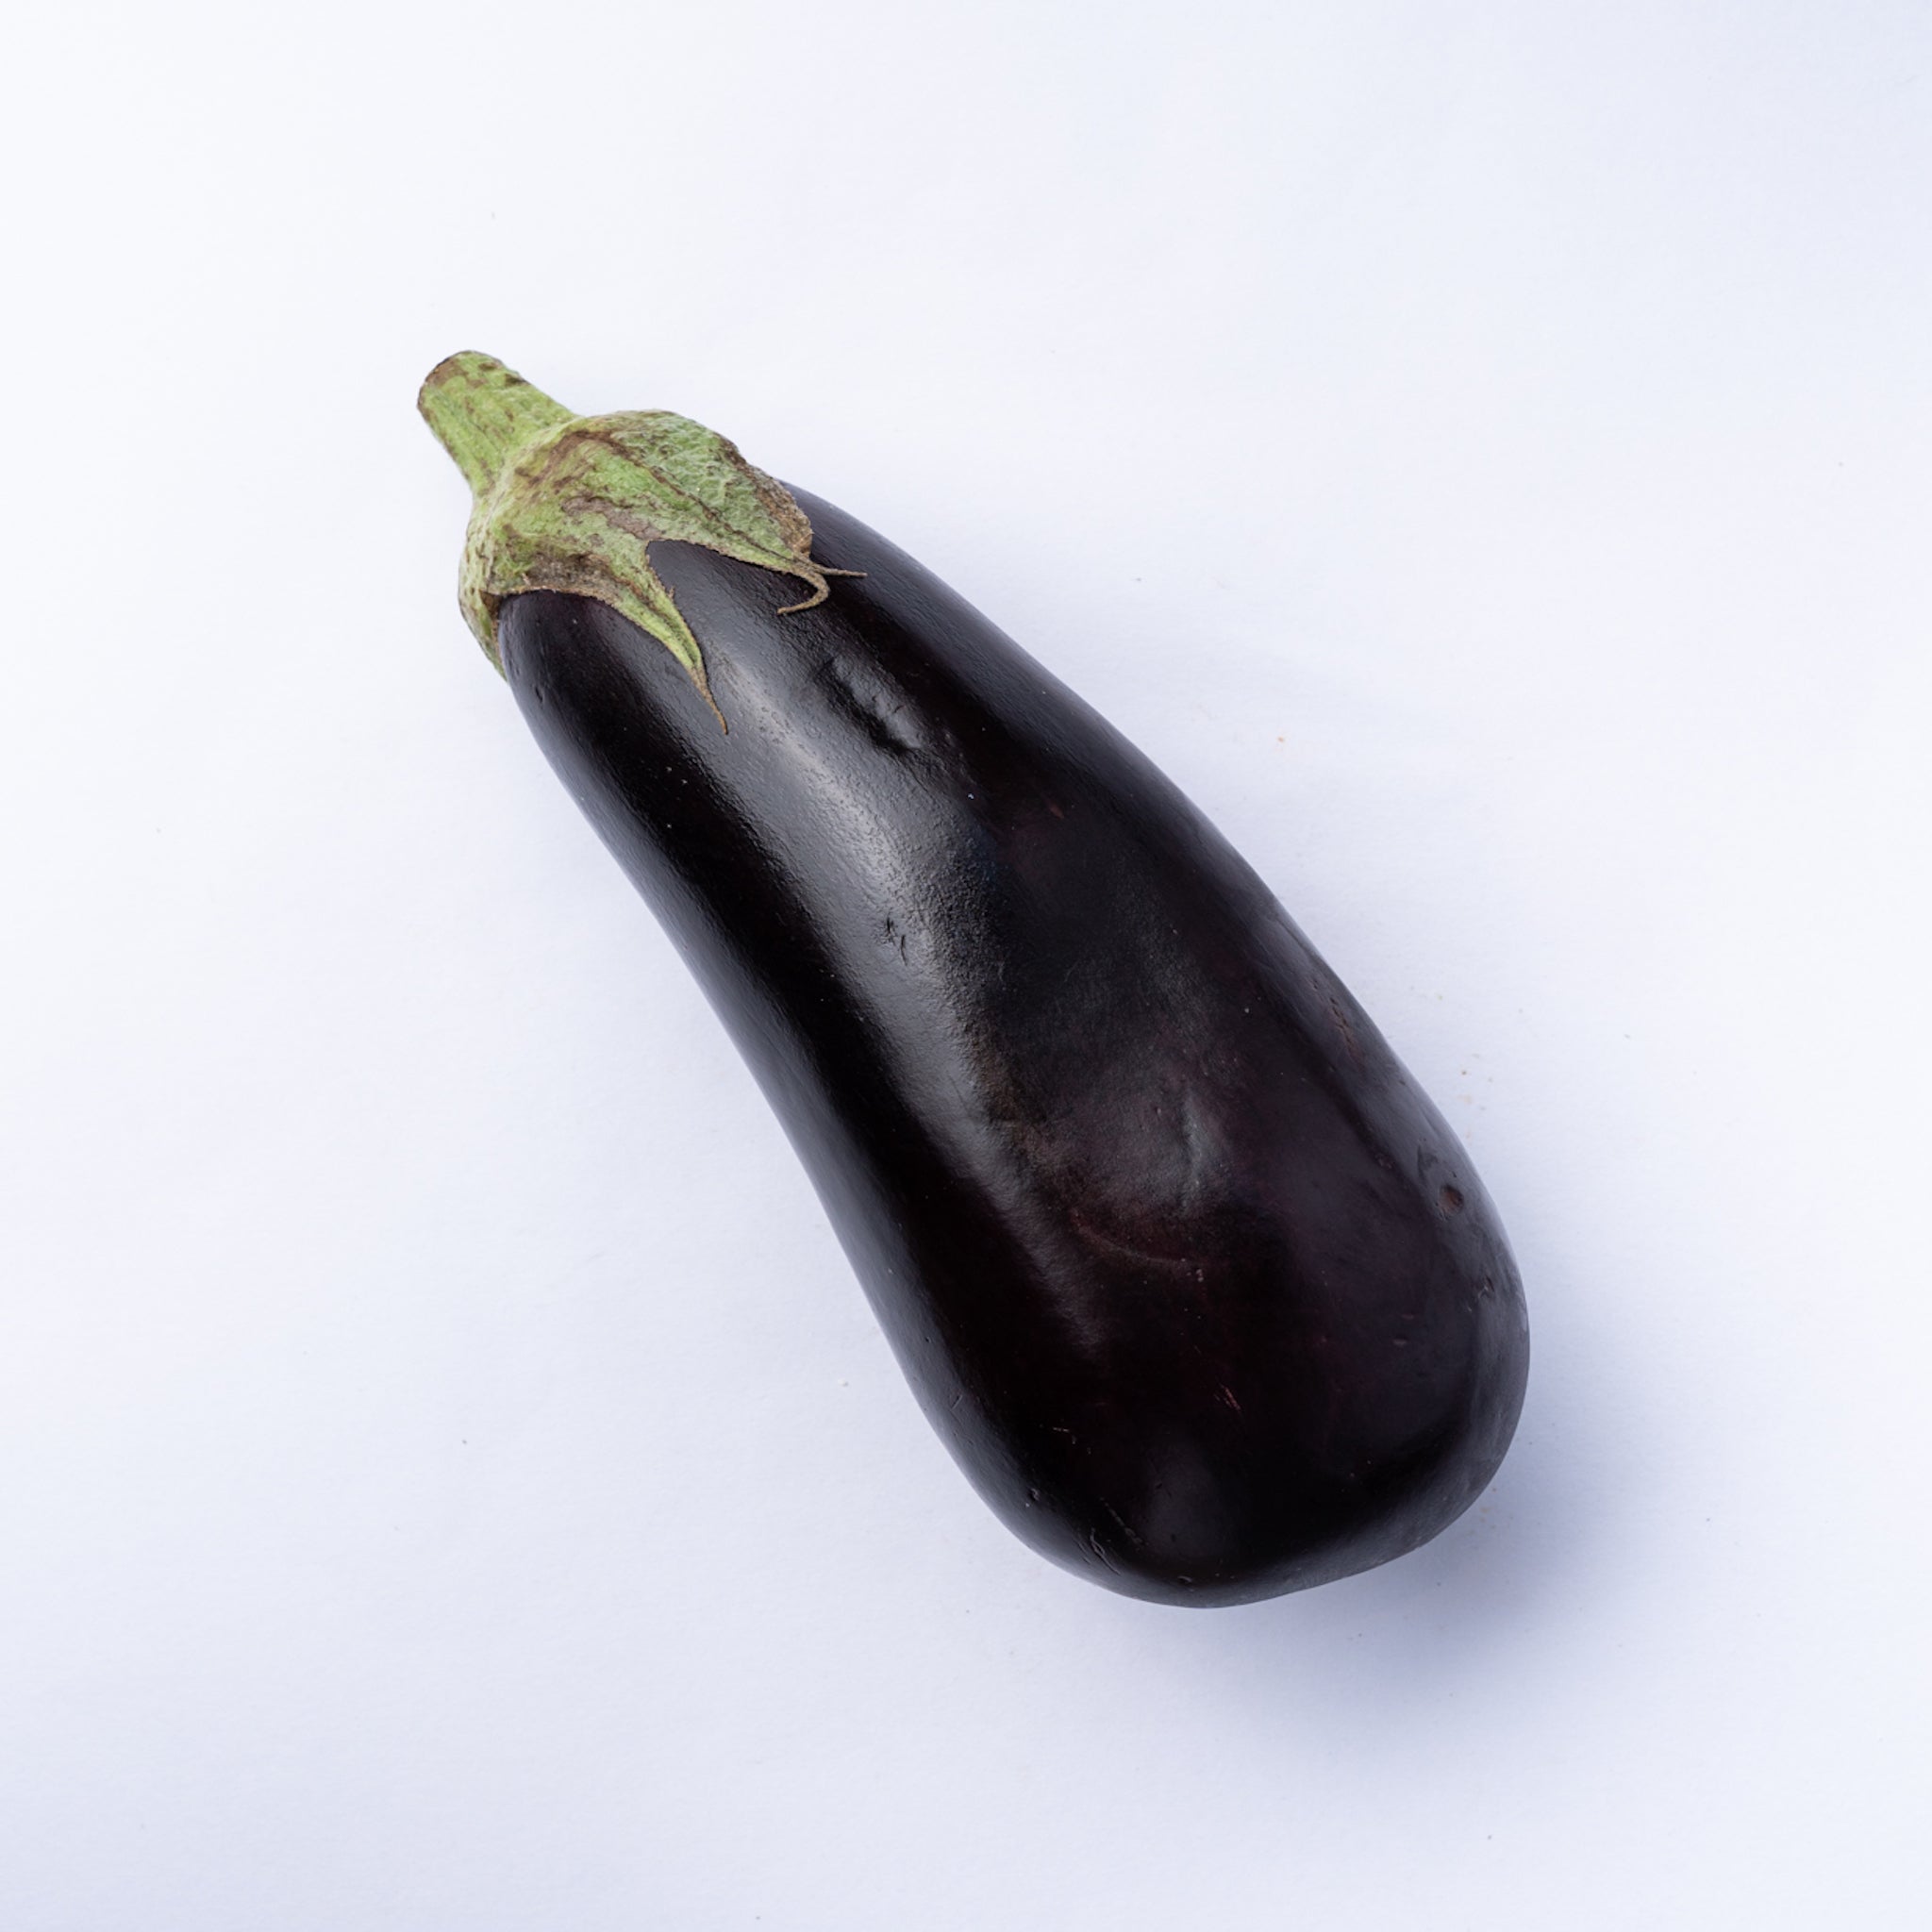 An eggplant aubergine.